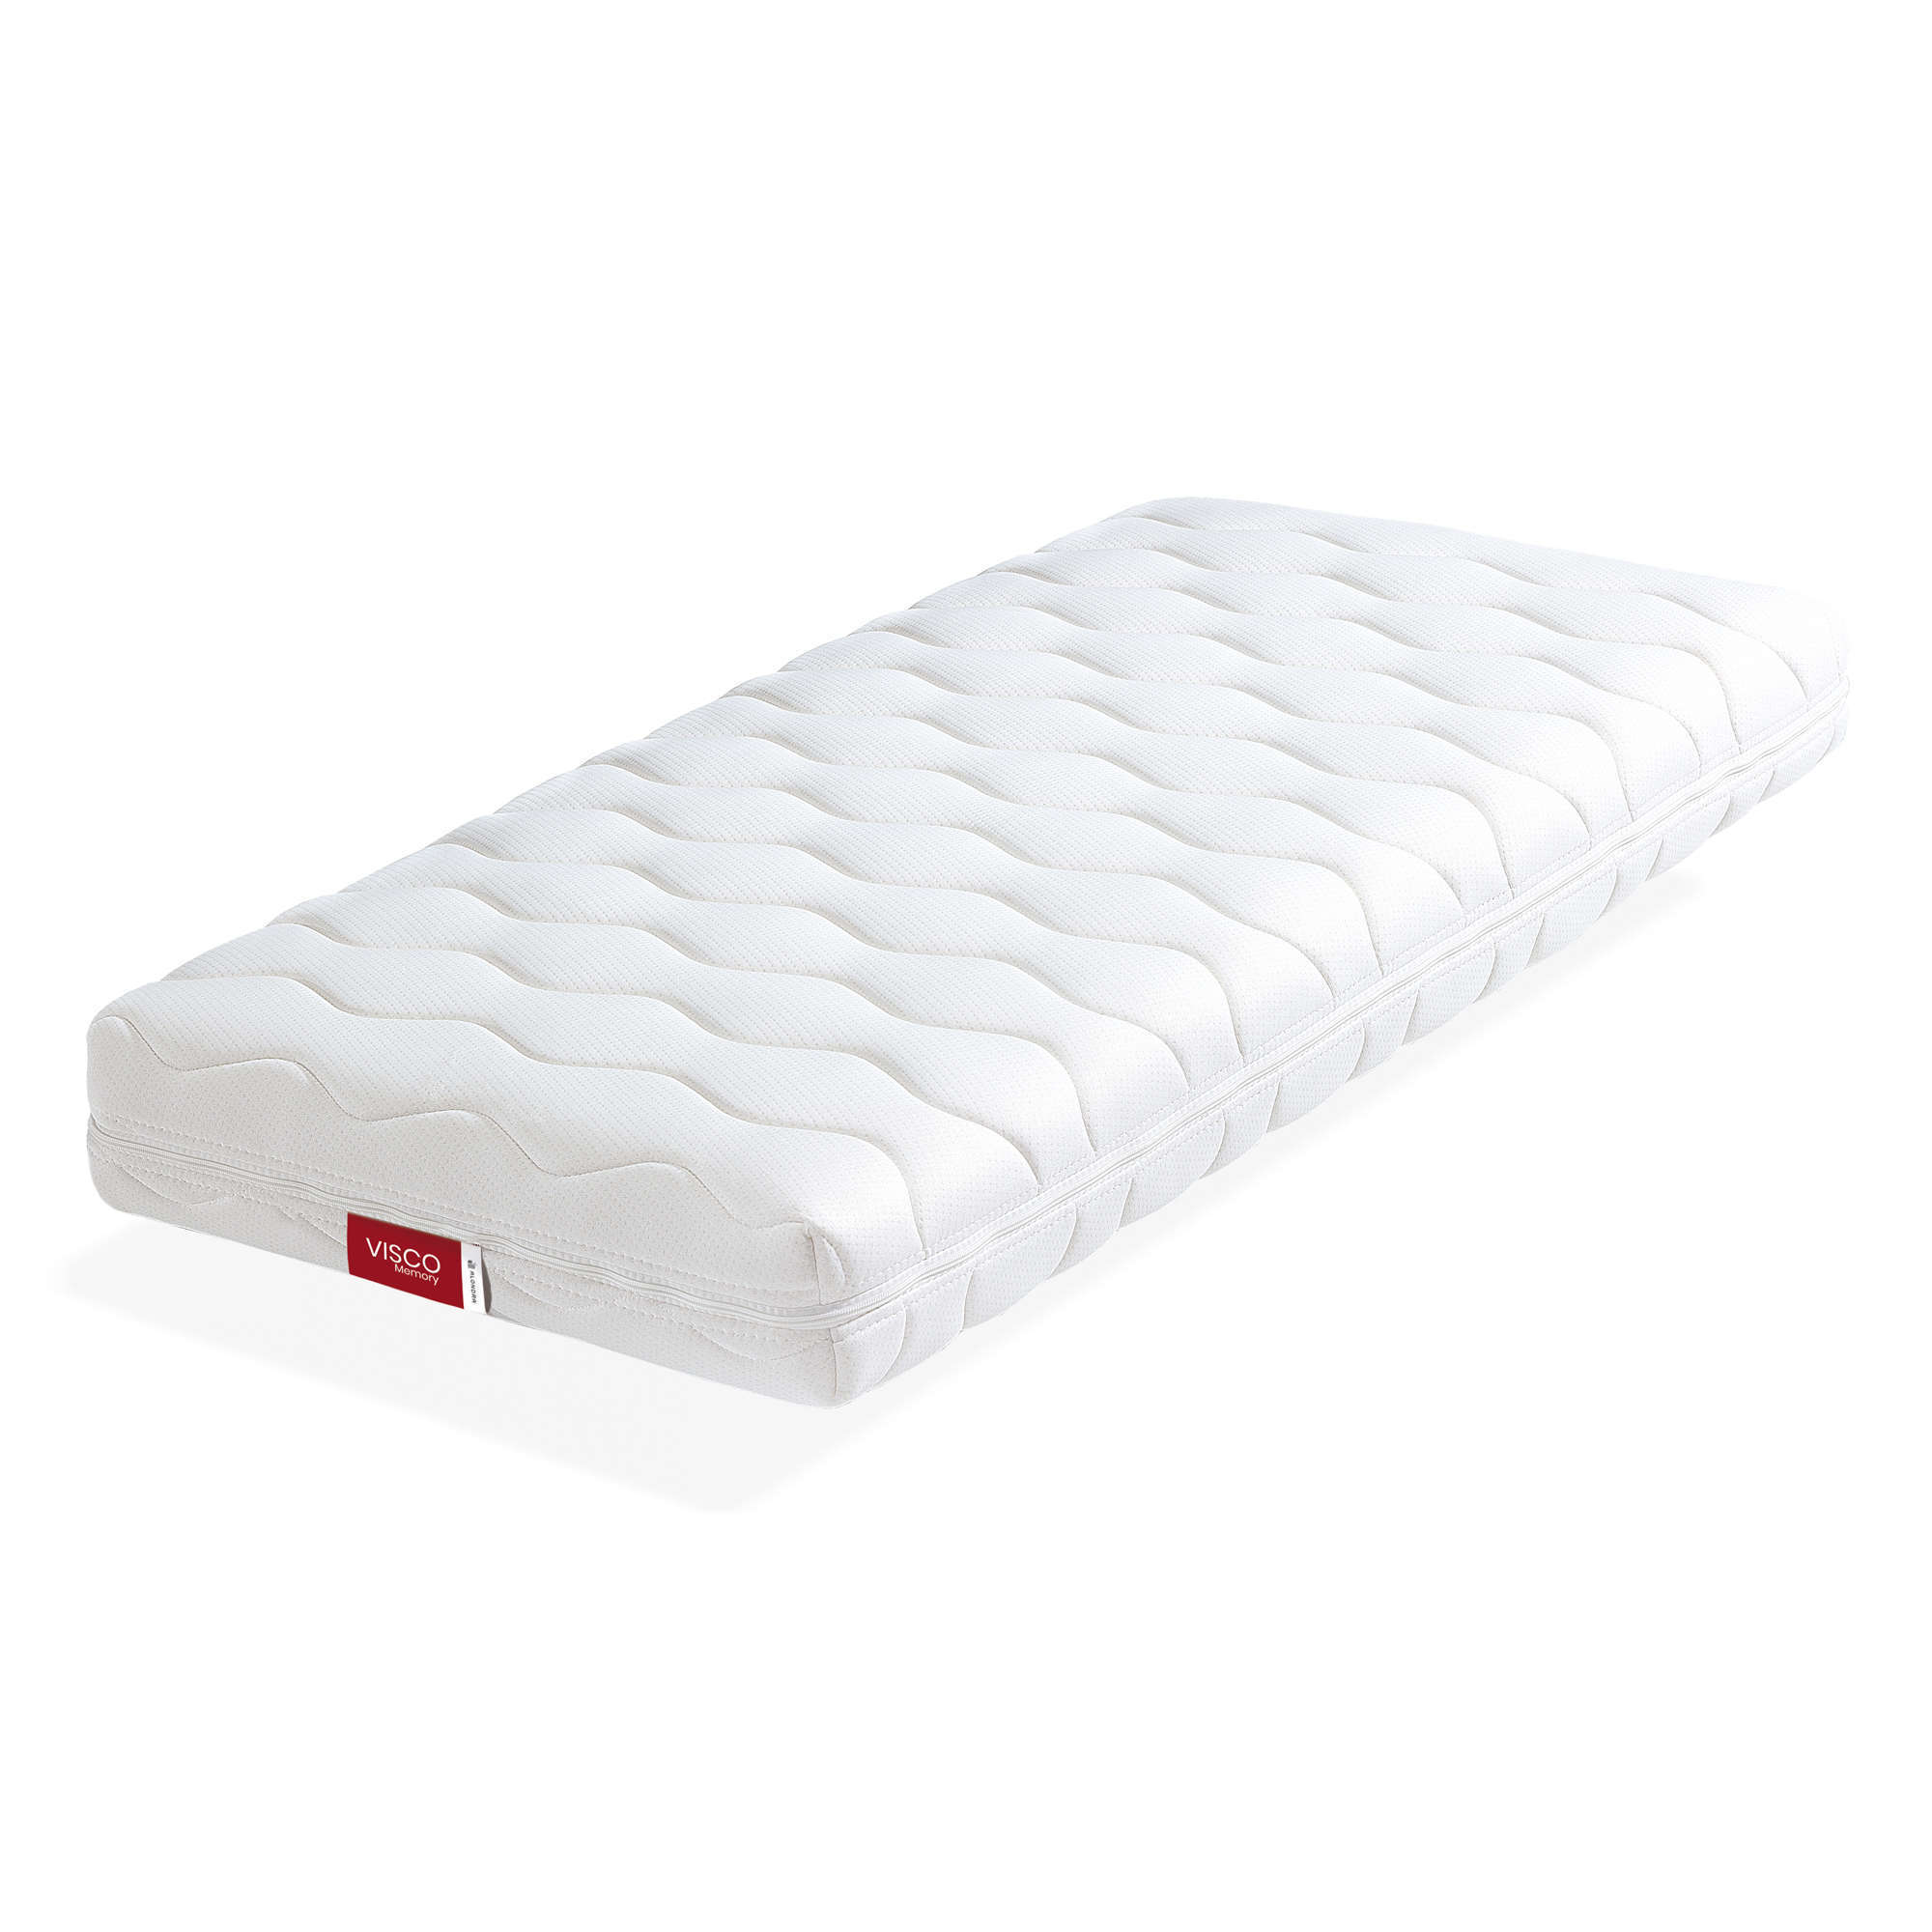 Memory foam mattress for cot 60x120